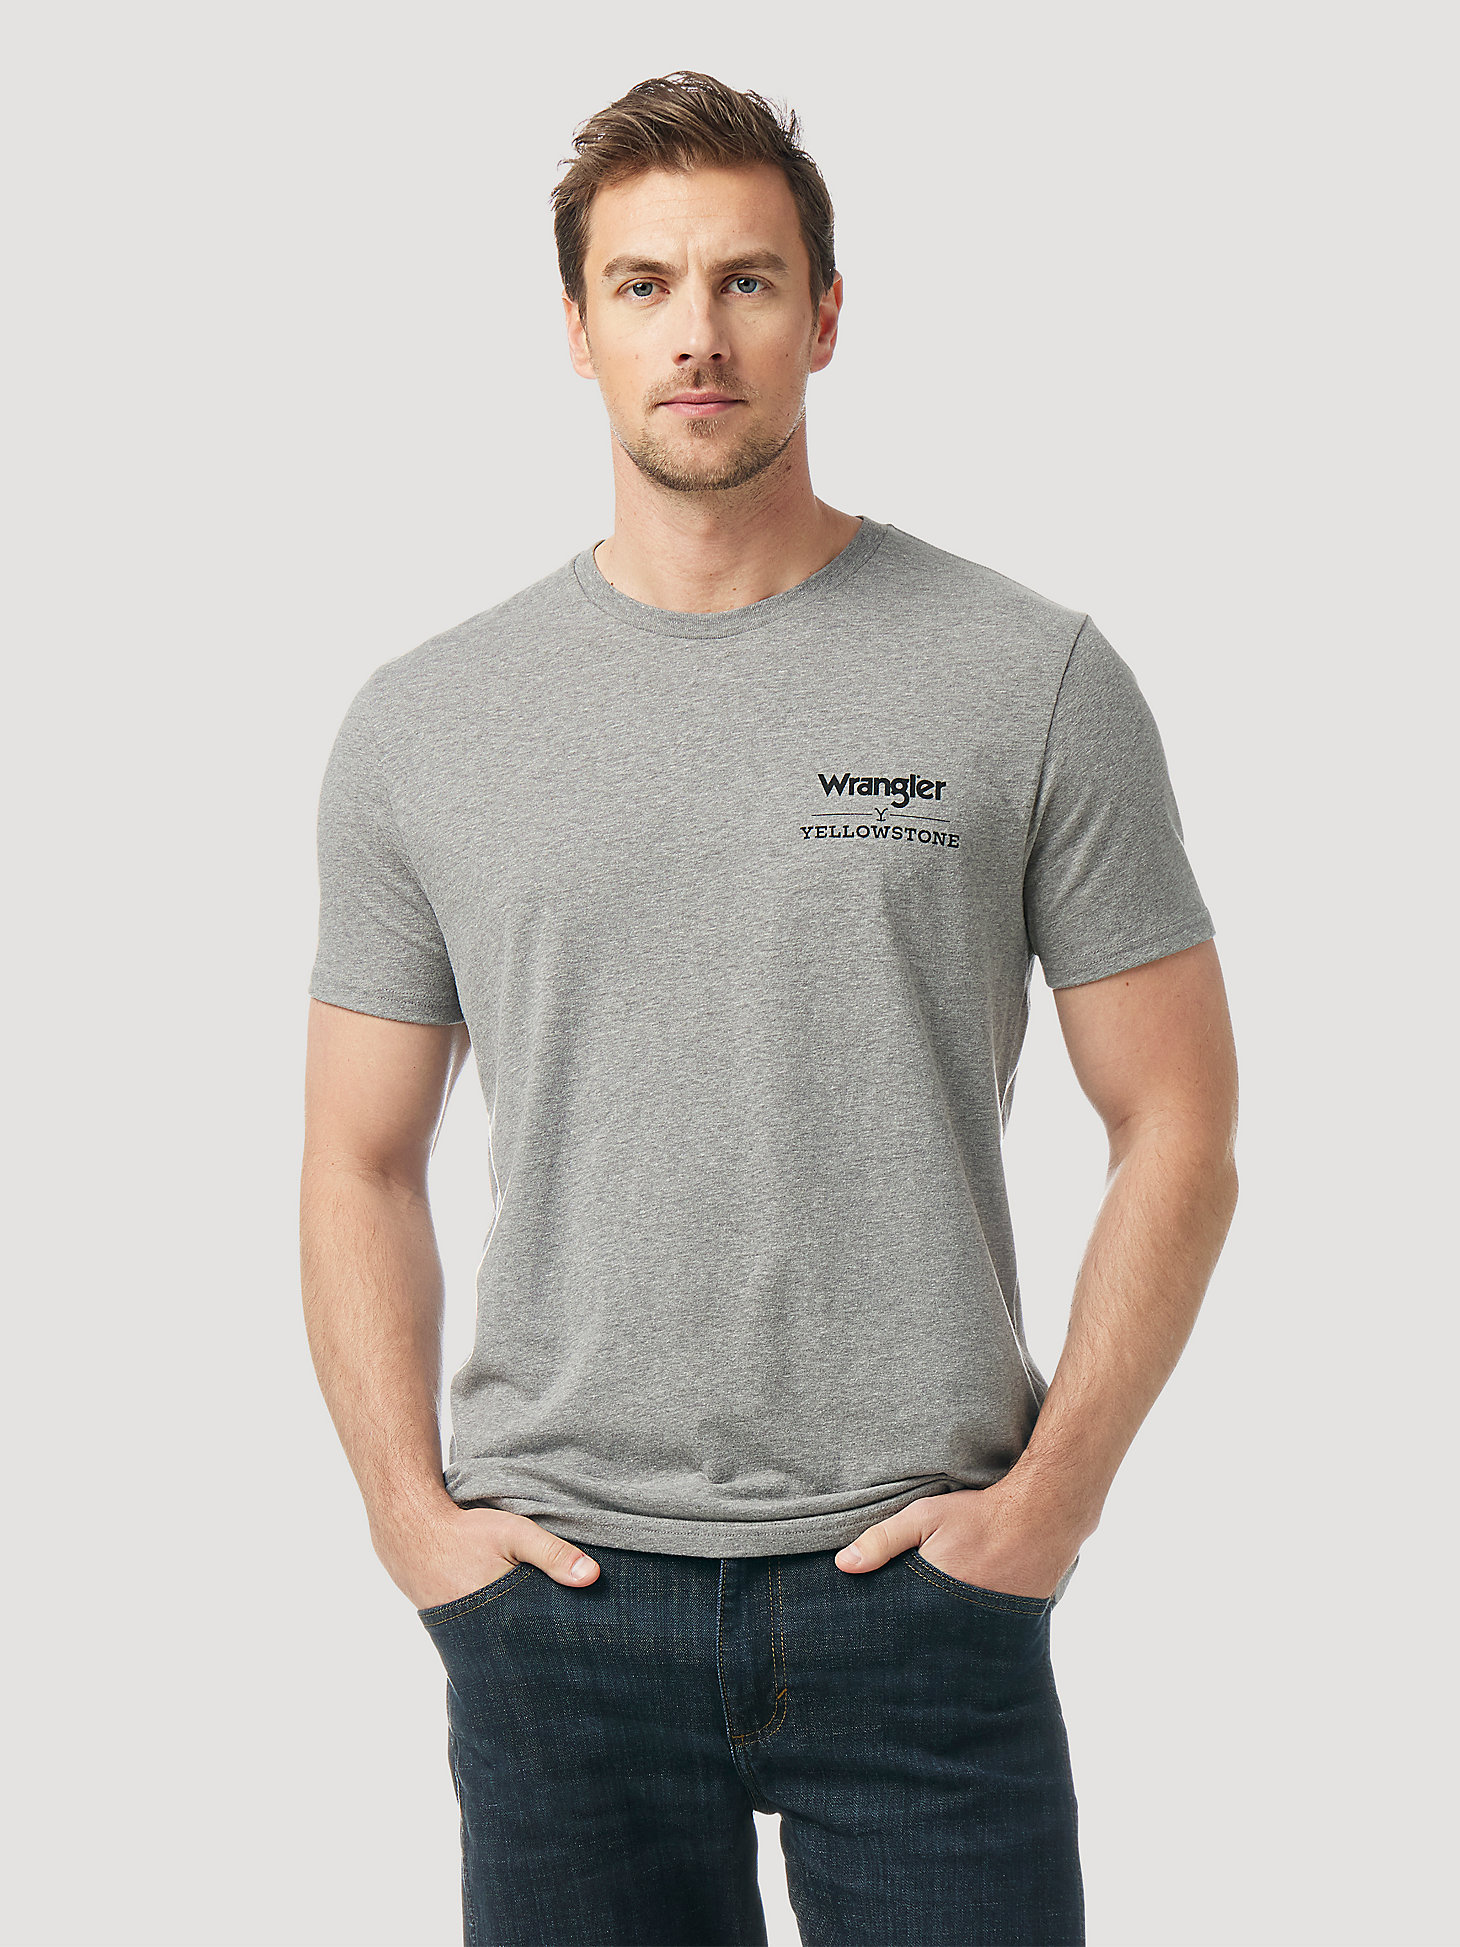 Wrangler x Yellowstone Men's Broken Rock T-Shirt in Graphite Heather alternative view 1